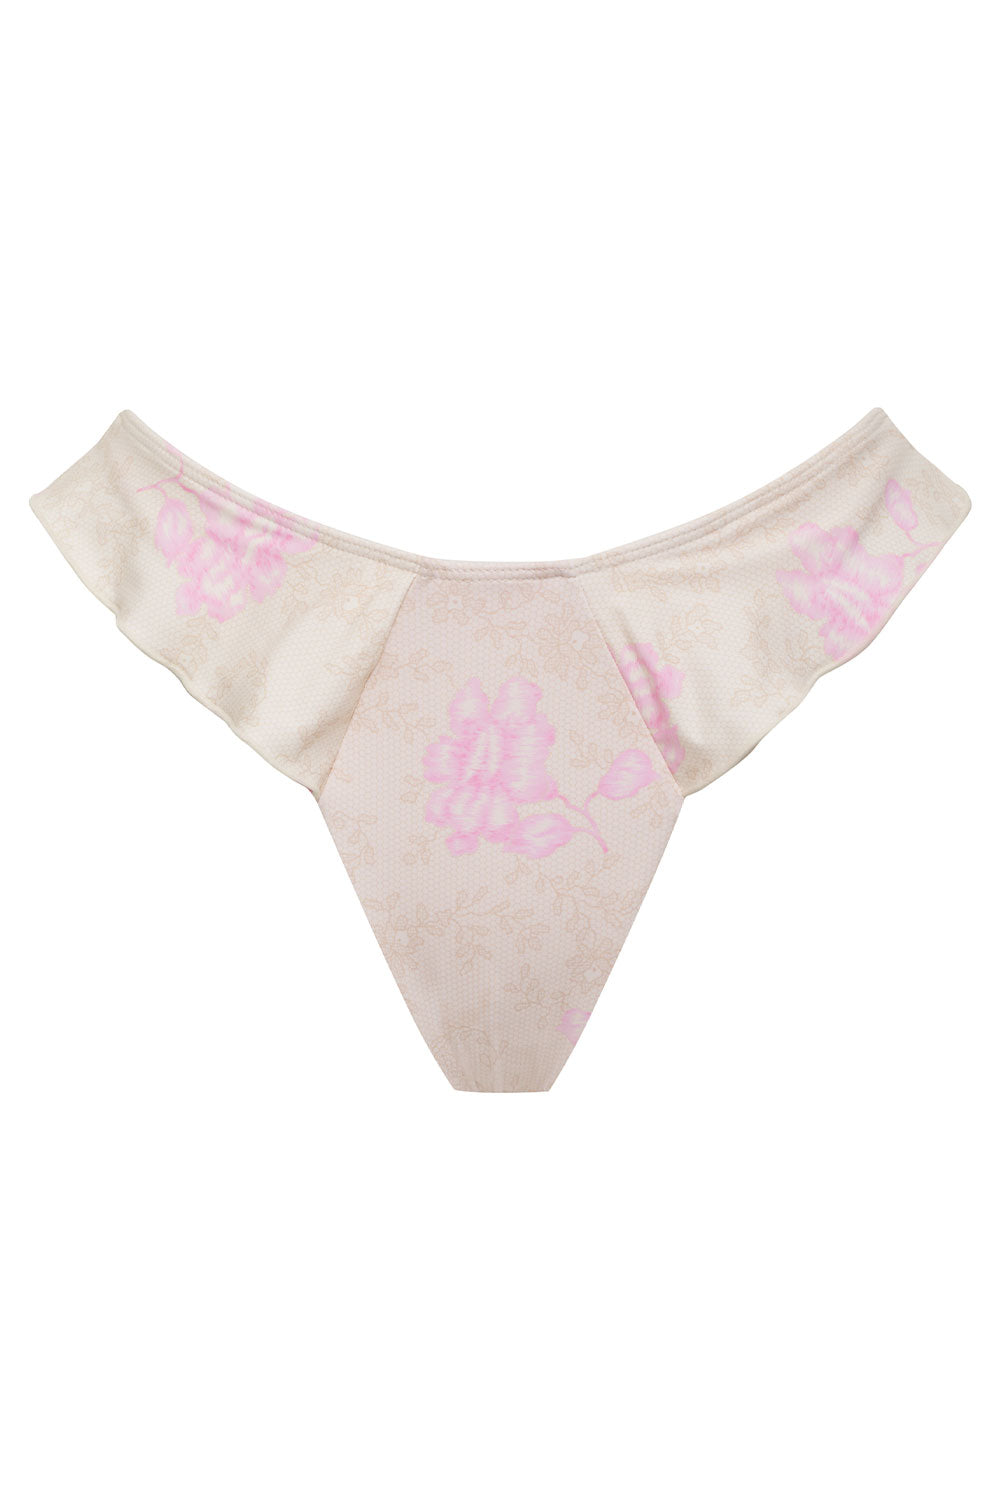 x PAMELA ANDERSON Westward Cheeky Bikini Bottom - Lace on the Beach